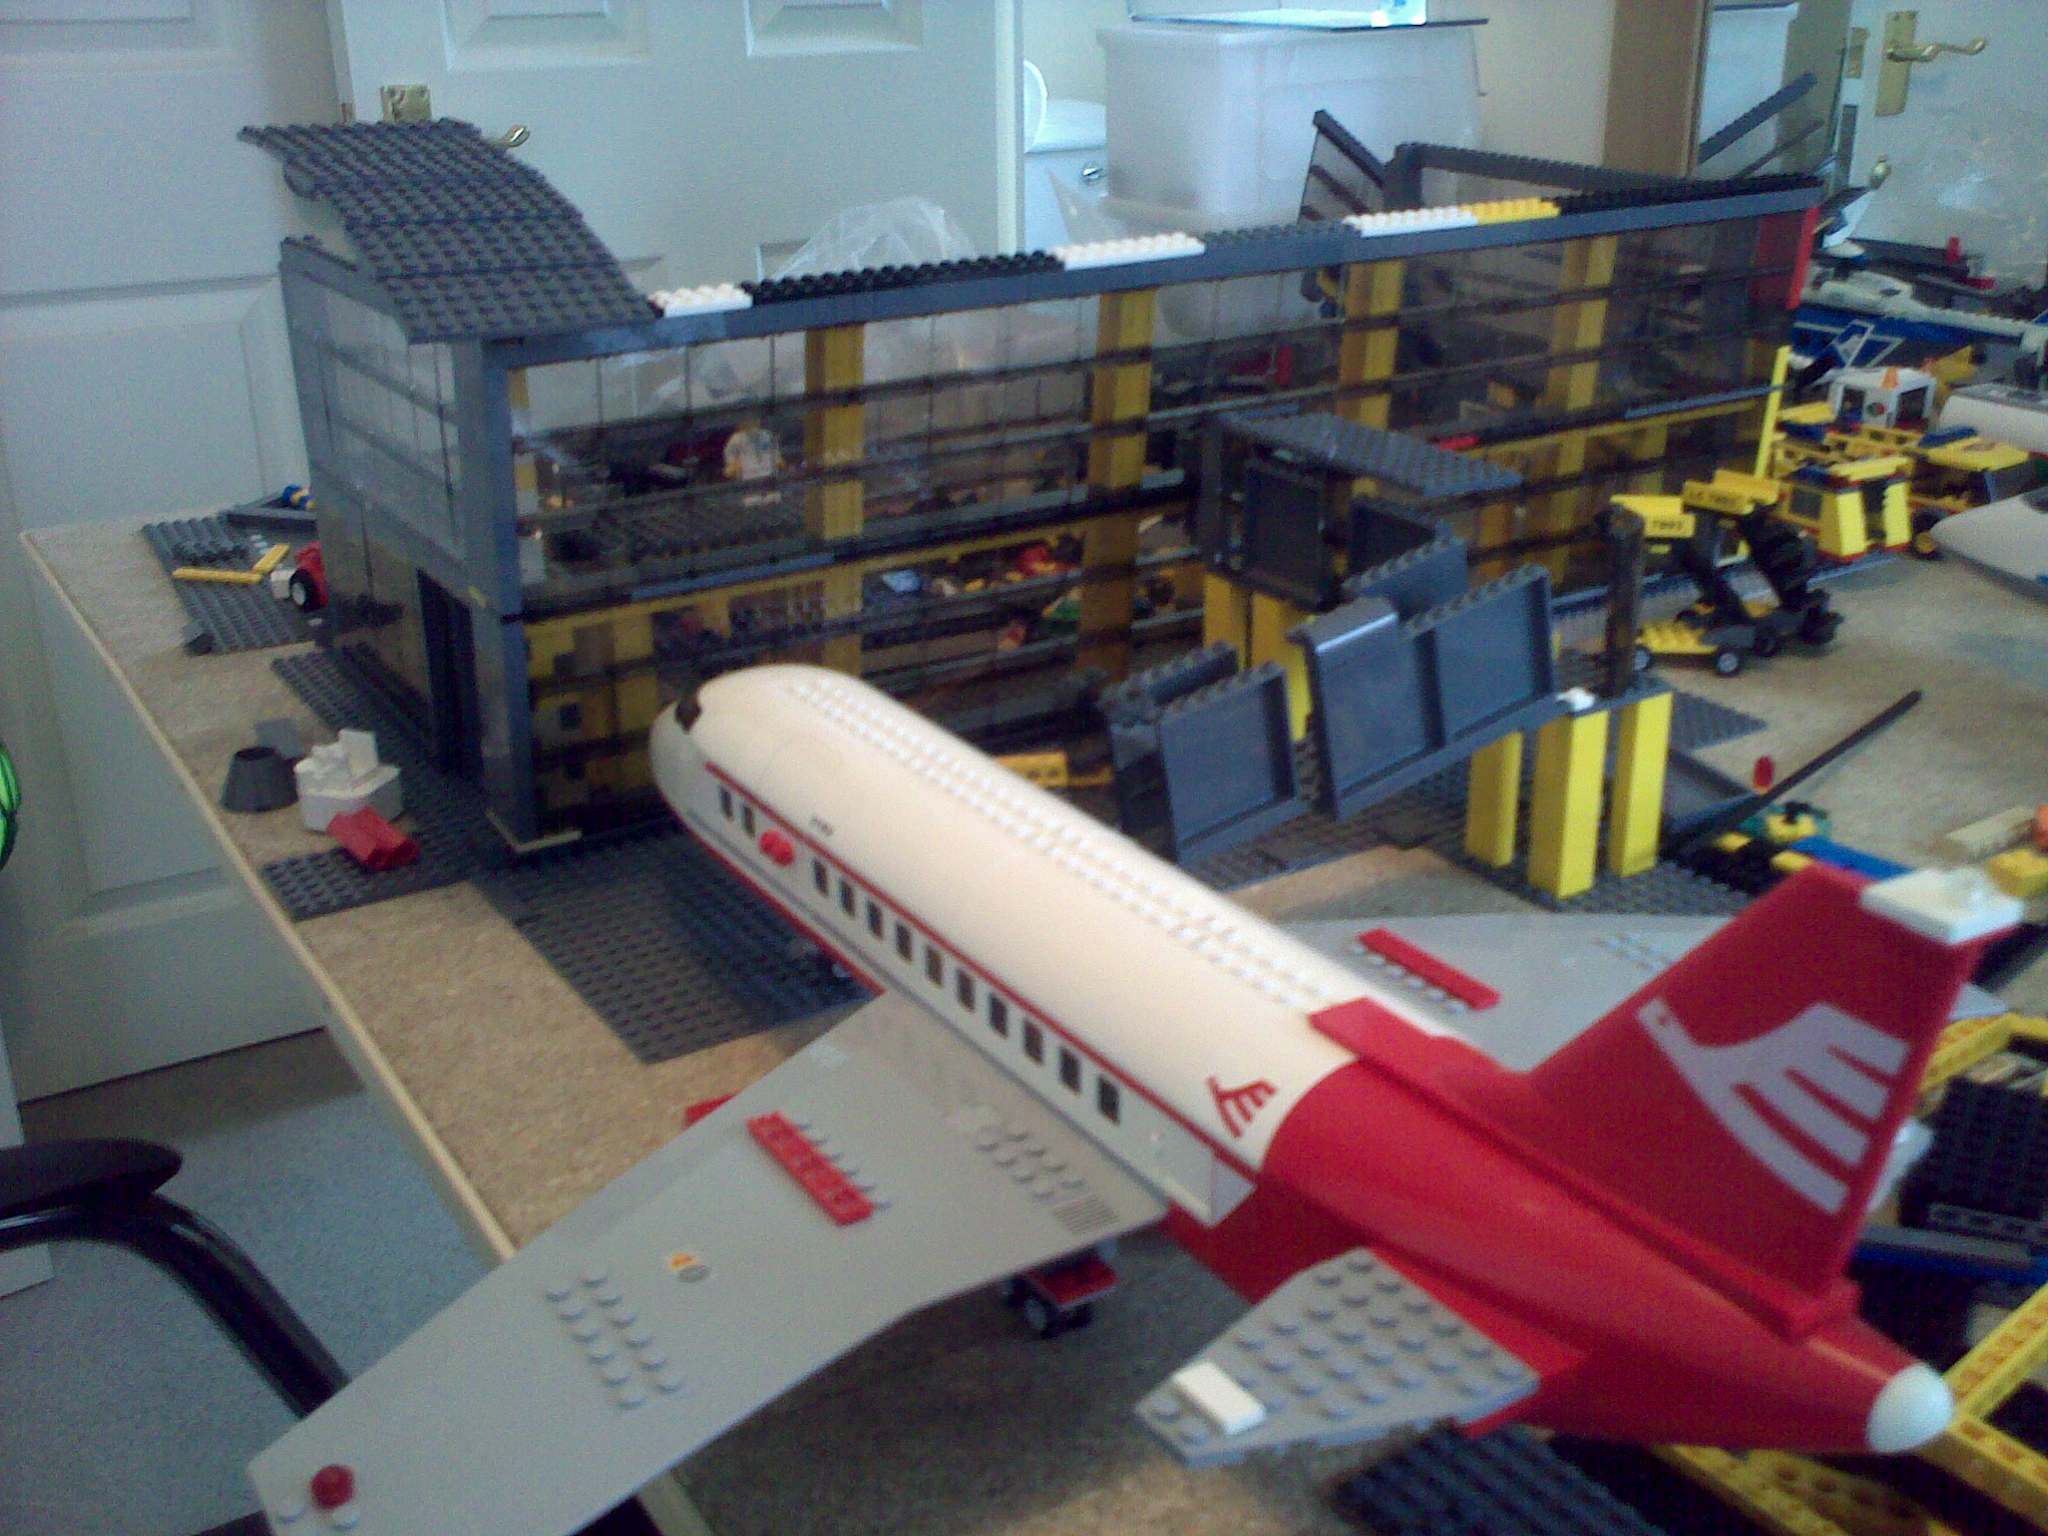 Lego Airport